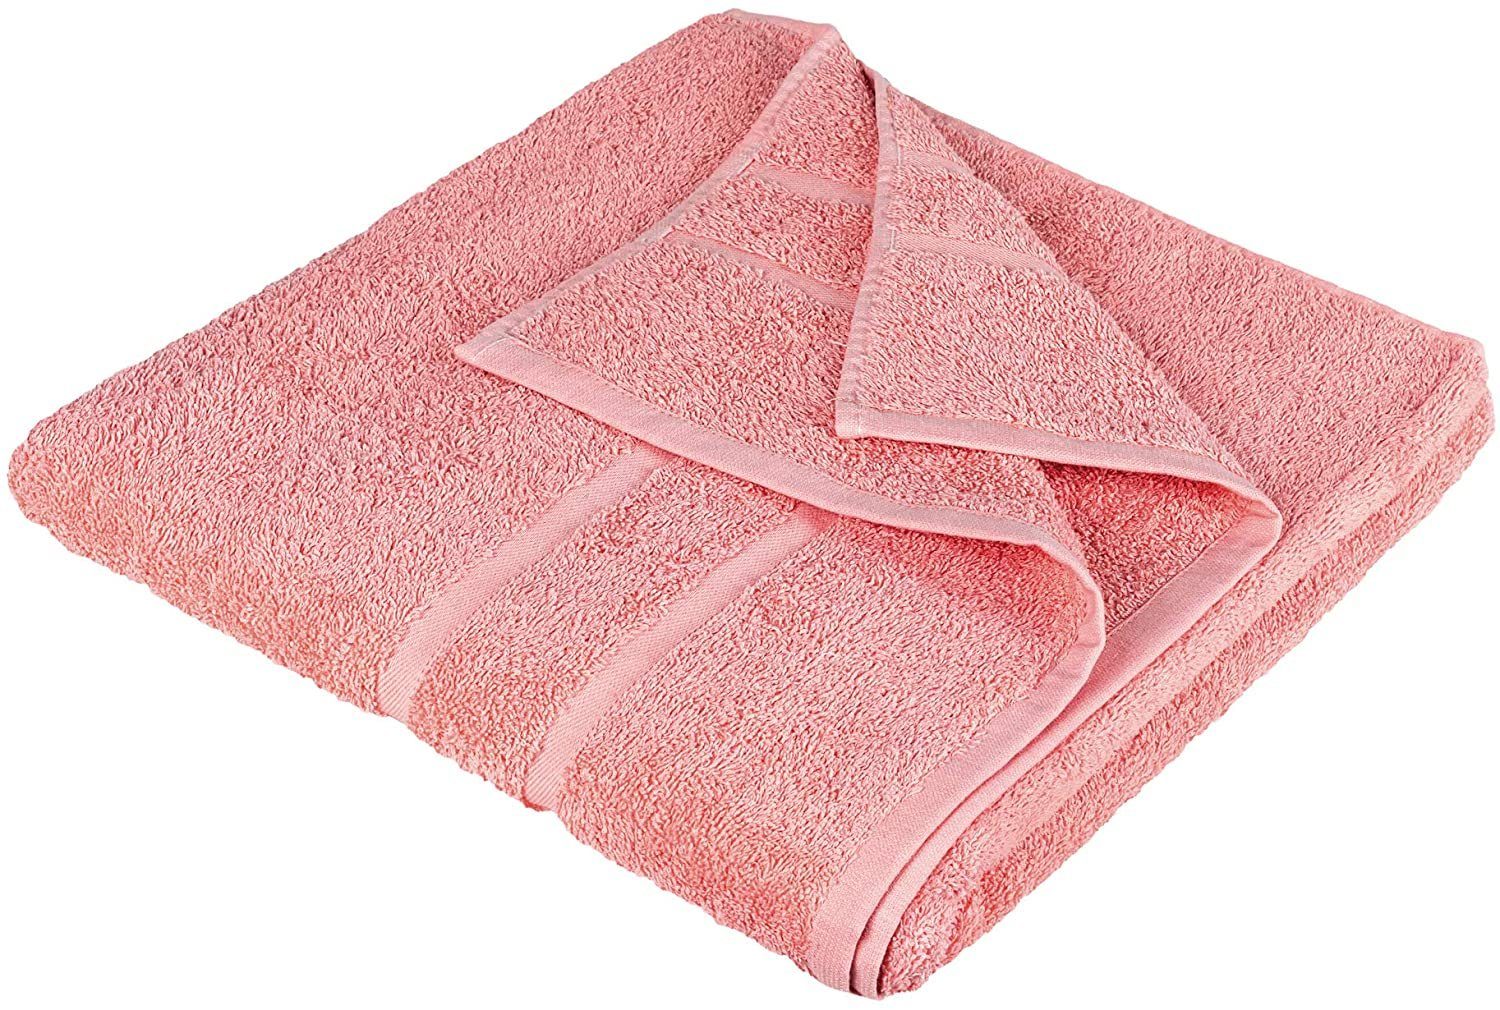 StickandShine Handtuch Set 100% Gästehandtuch 2x SET (Spar-SET) Baumwolle, Lachs 4x 4x Handtücher Duschtücher